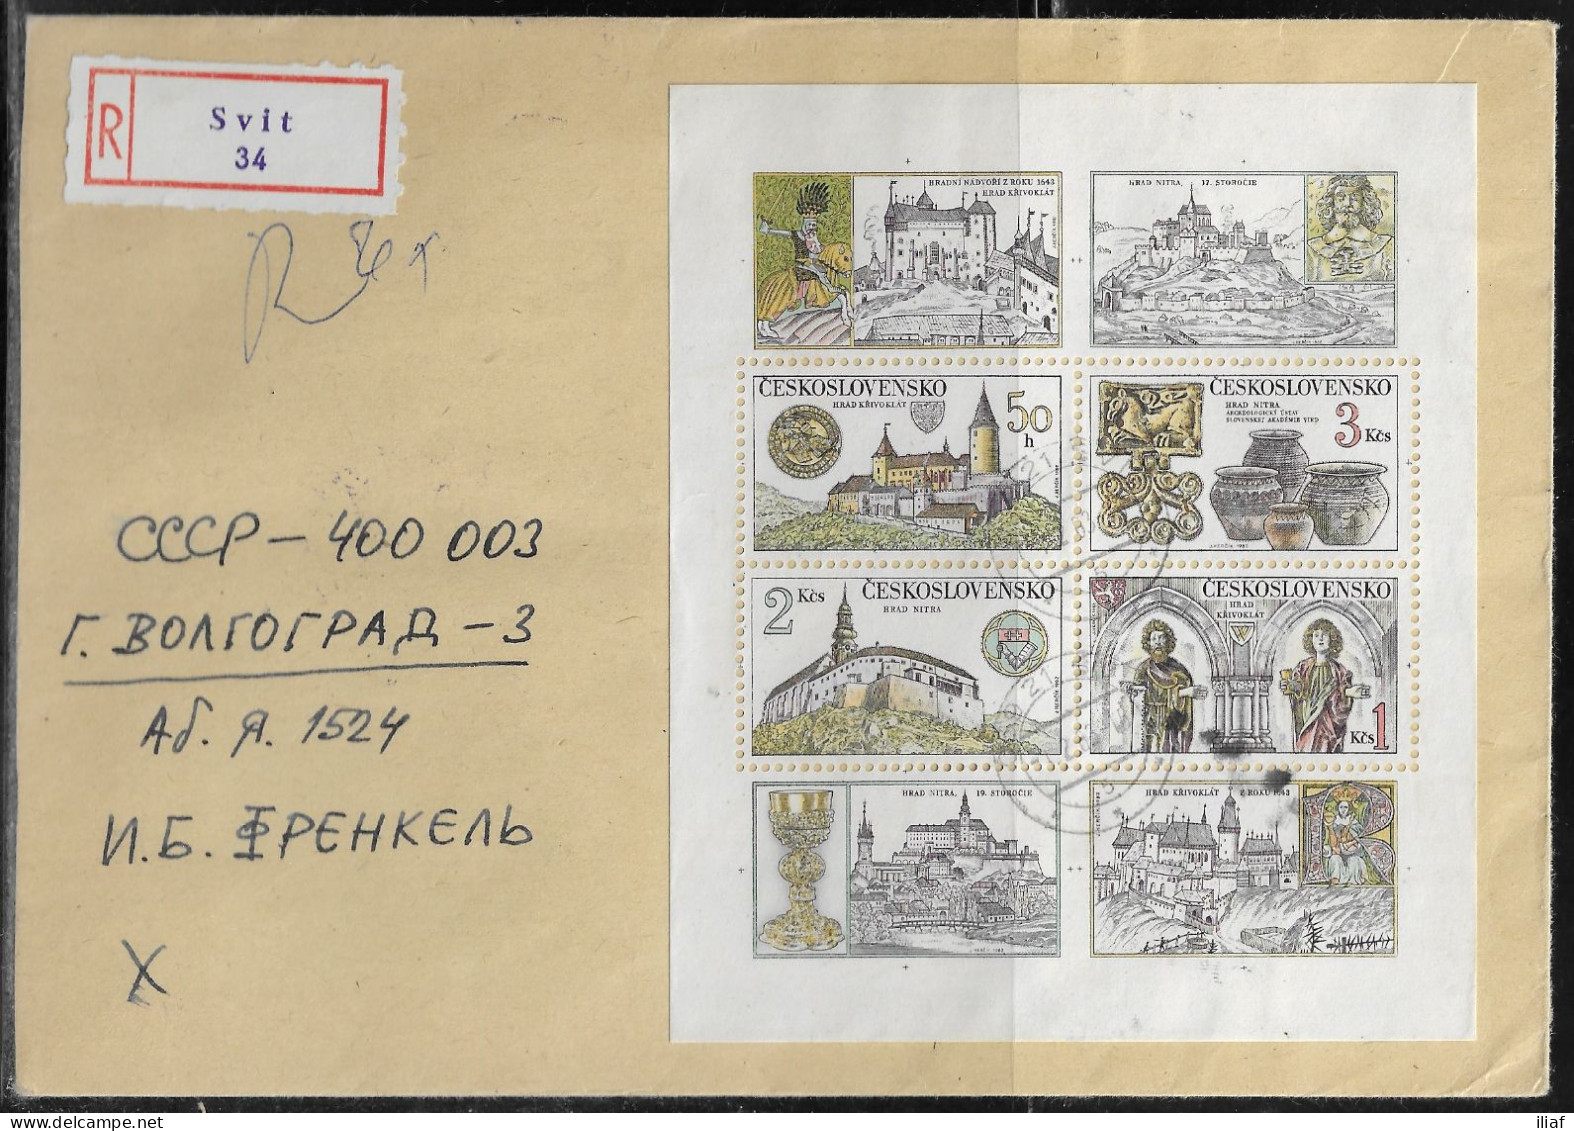 Czechoslovakia. Souvenir Sheet Sc. 2418a On Registered Letter, Sent 1.02.83 From Svit For USSR Volgograd. - Briefe U. Dokumente